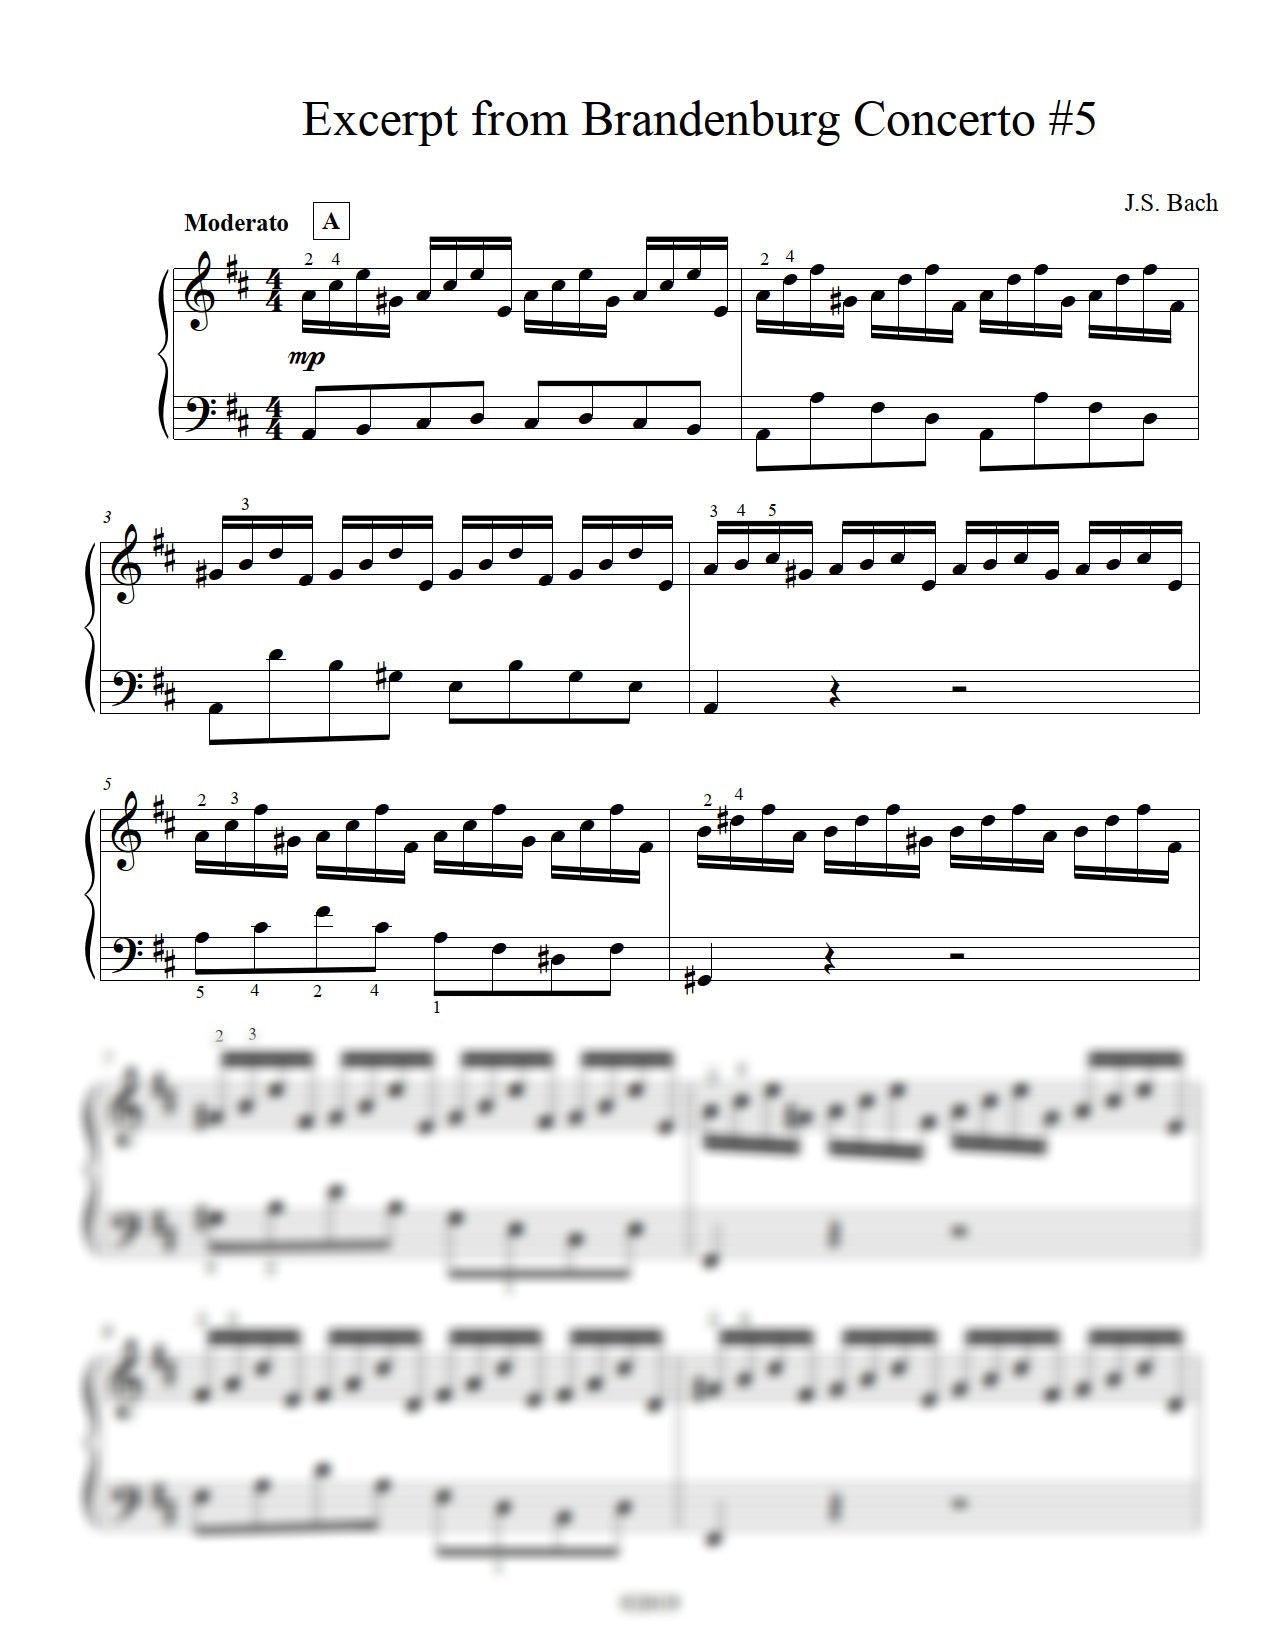 J.S. Bach: Brandenburg Concerto #5, BWV 1050 arranged for piano by Eleonor Bindman (GPC064)